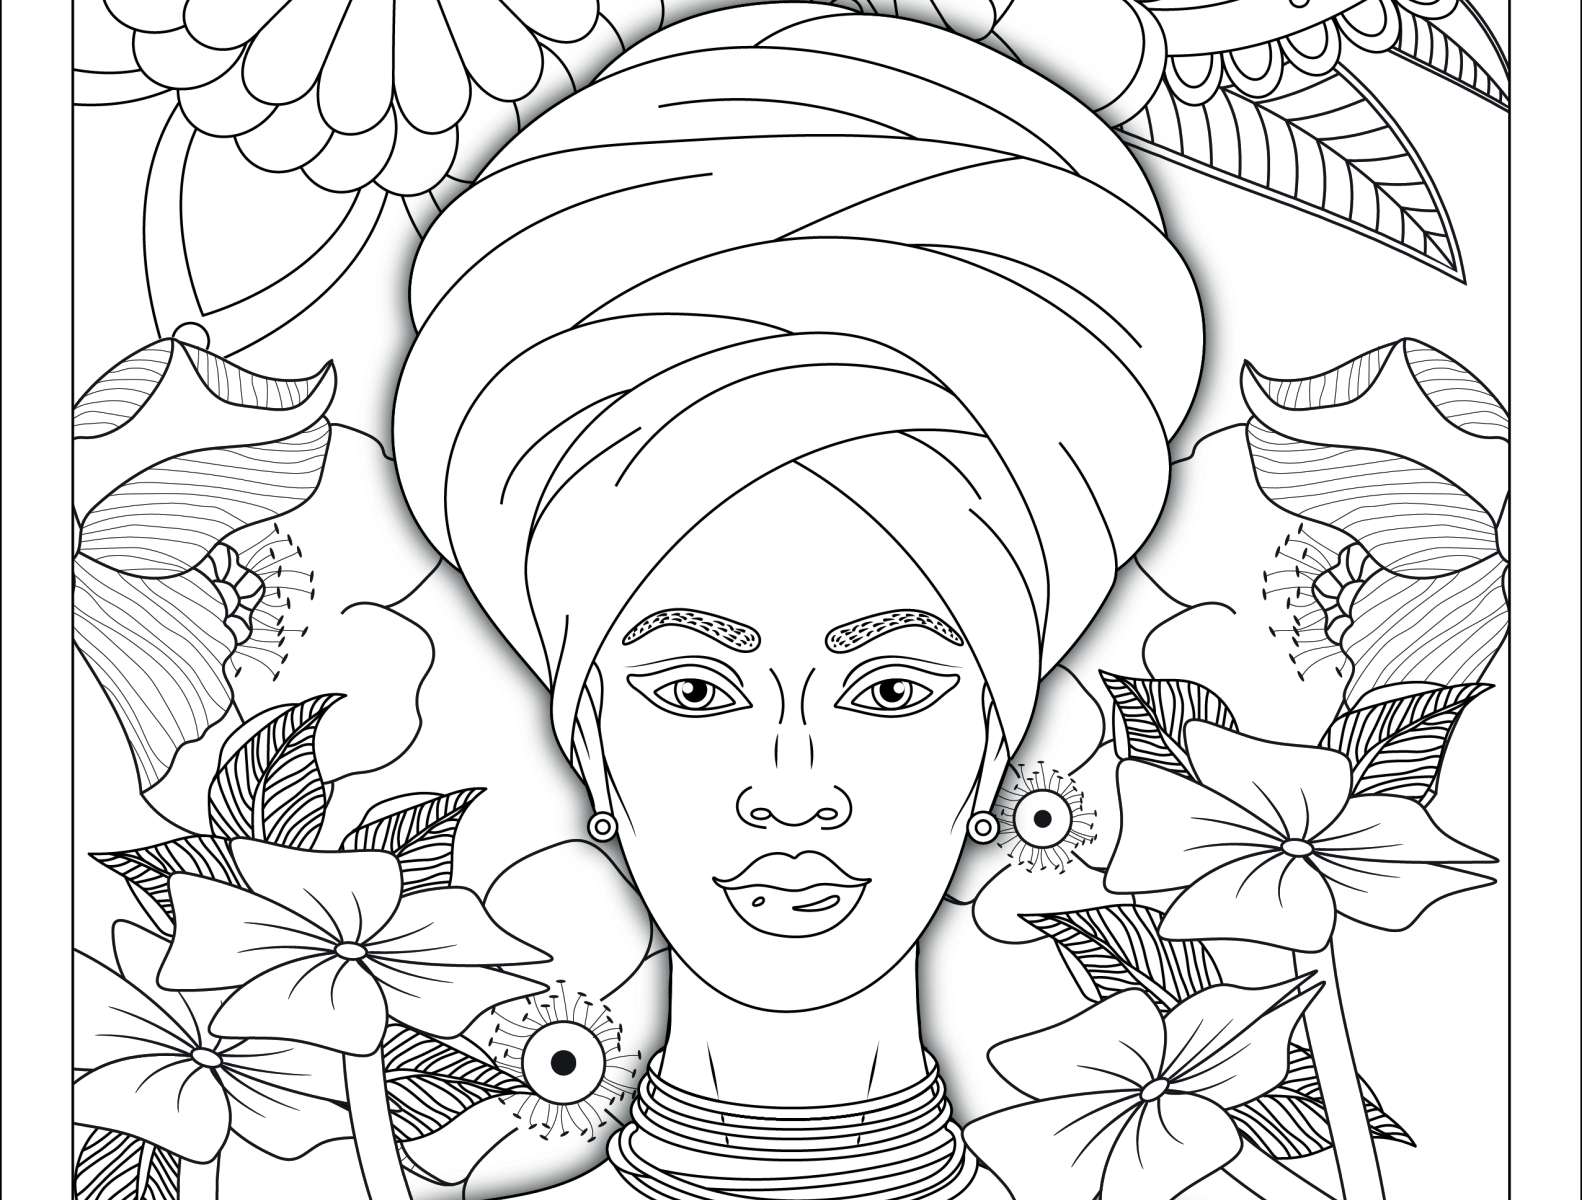 African women coloring page by Gx_Rakibul on Dribbble